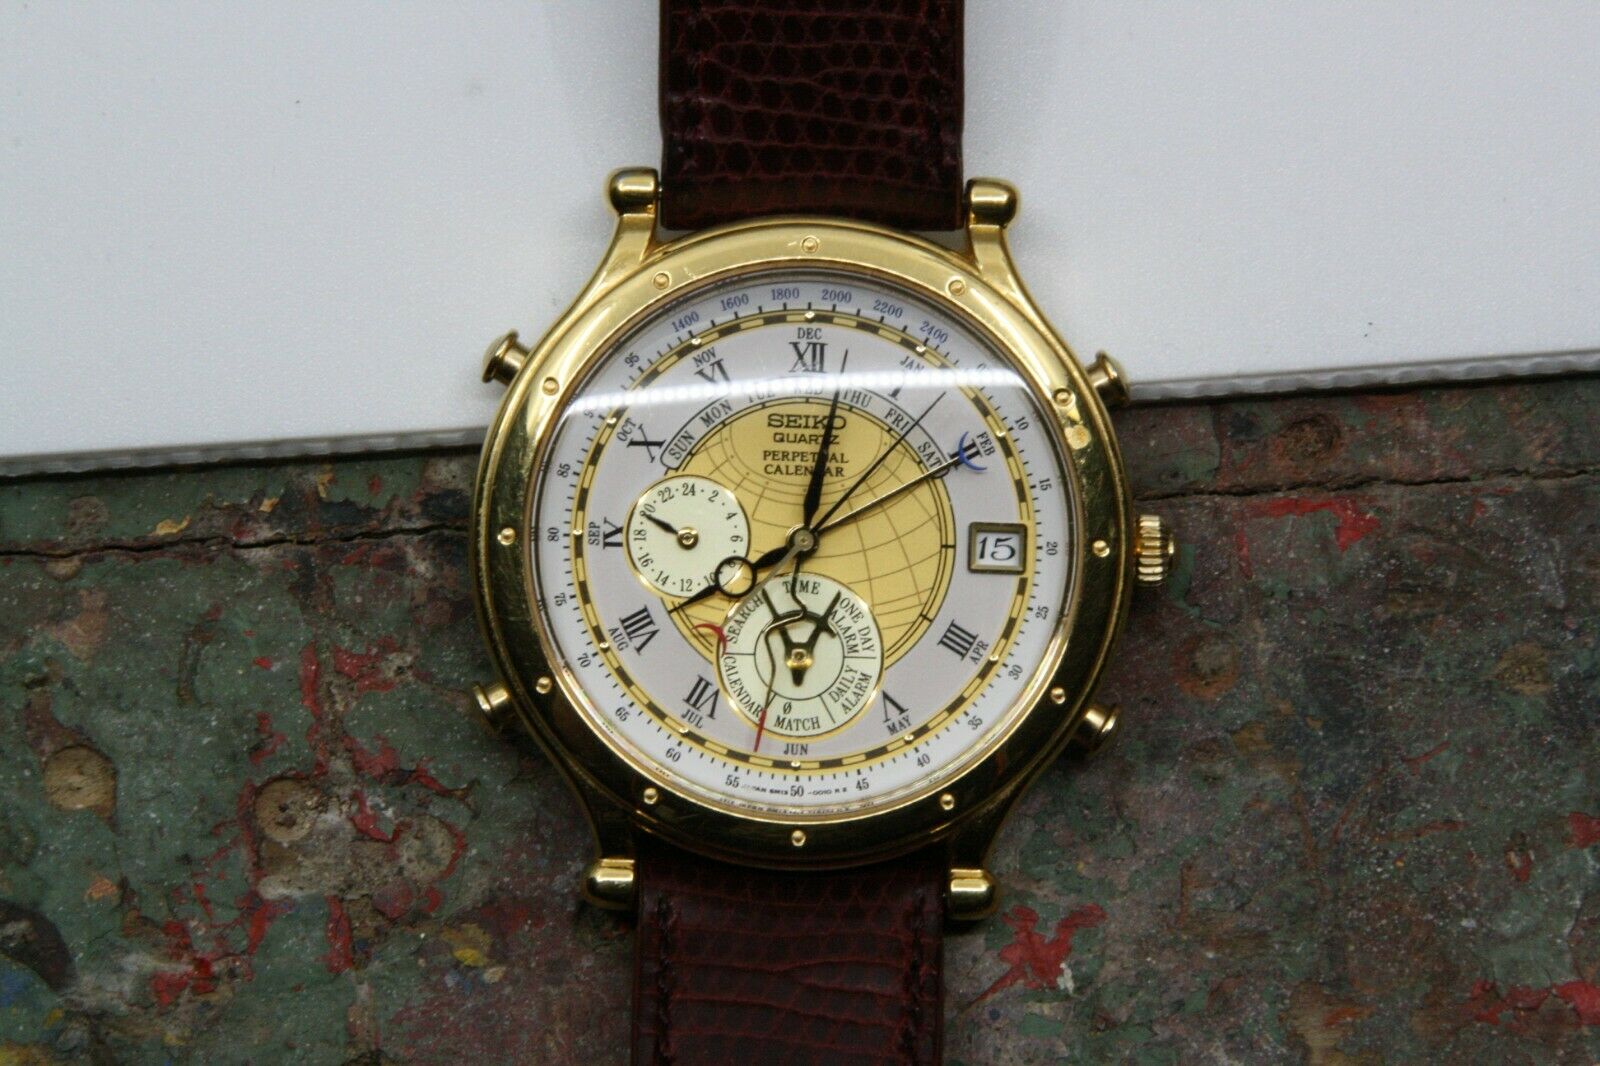 Seiko 6M13-0019 Age of Discovery Perpetual Calendar quartz watch |  WatchCharts